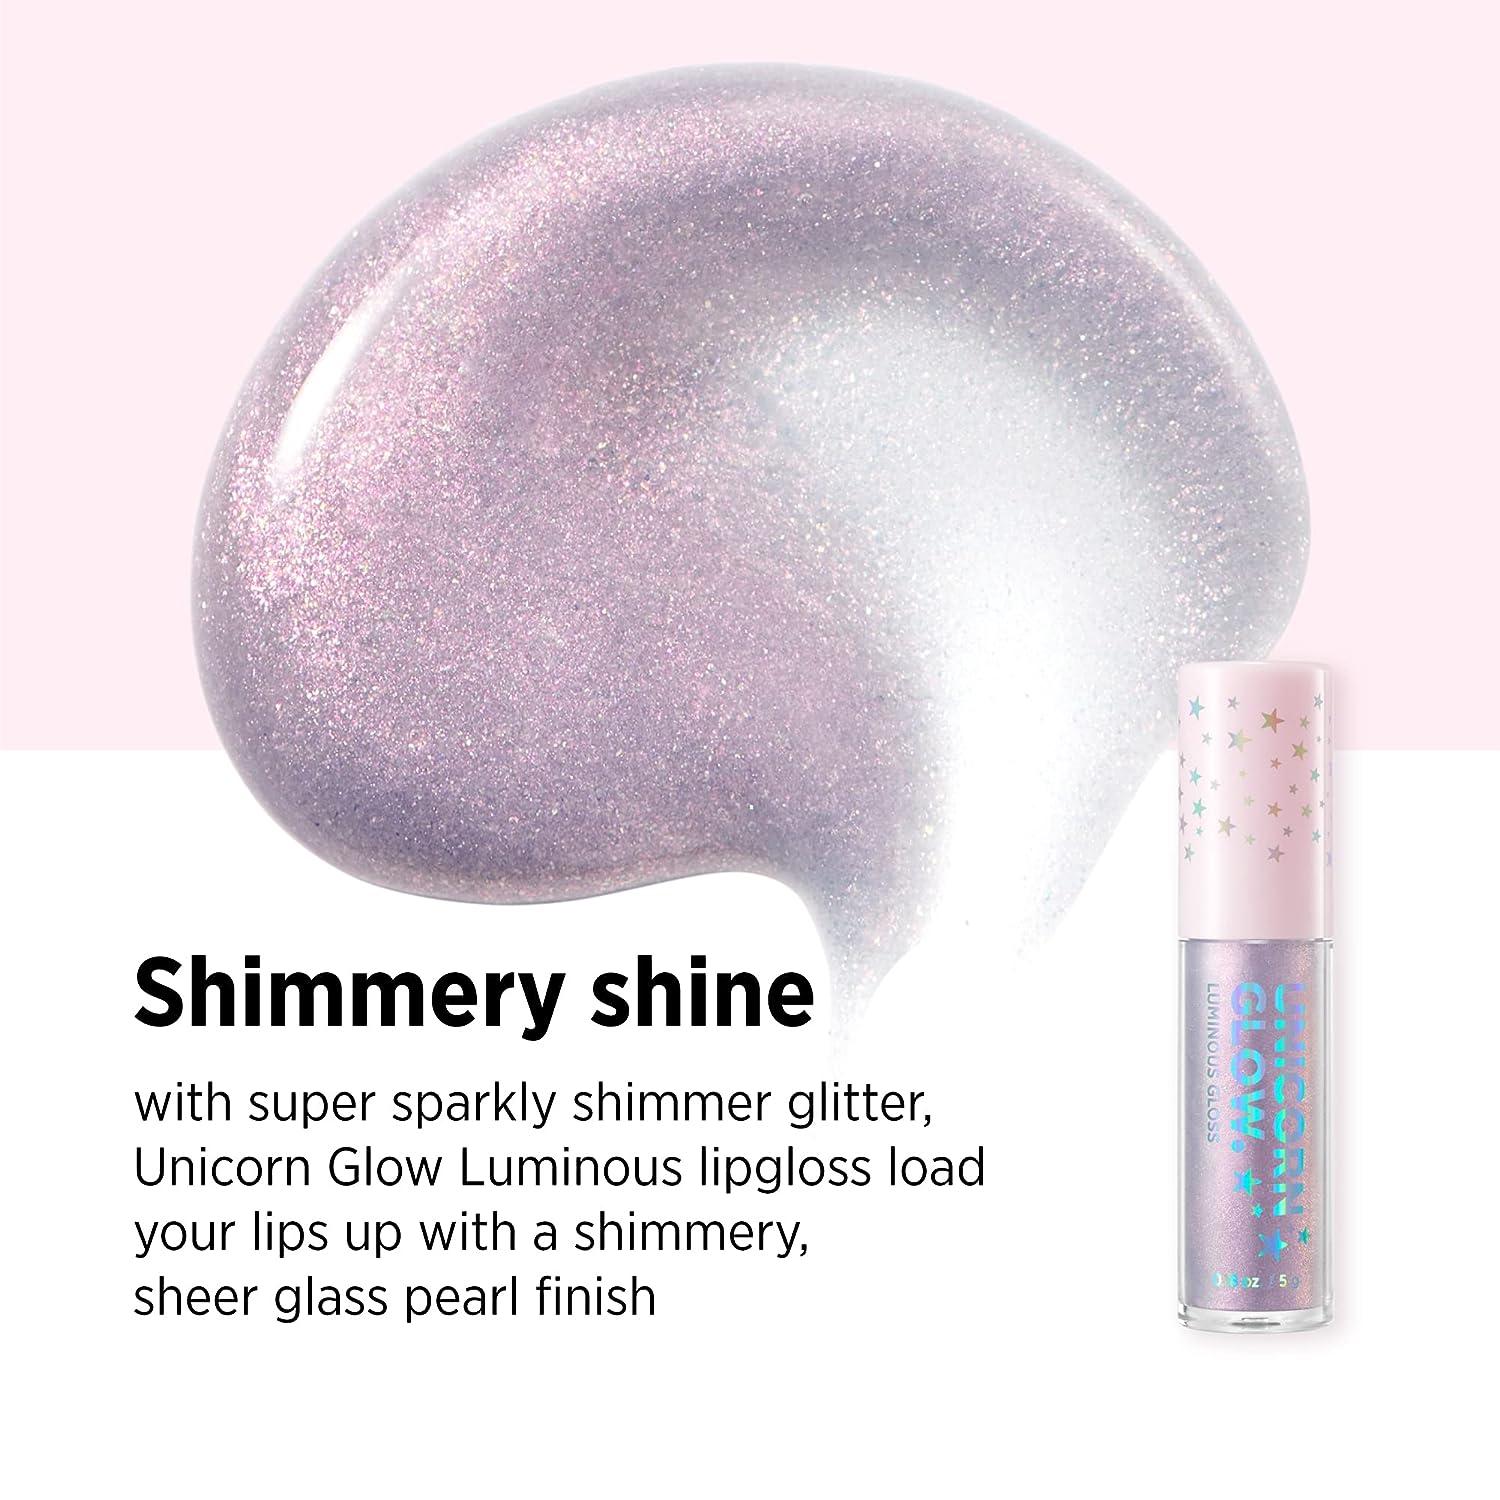 UNICORN GLOW Luminous Lip Gloss 4 Aurora - Shimmery Glitter Moisturizing  Lip Gloss with Shimmery Finish - Lightweight Sheer and Hydrating 0.18 oz. /  5 g